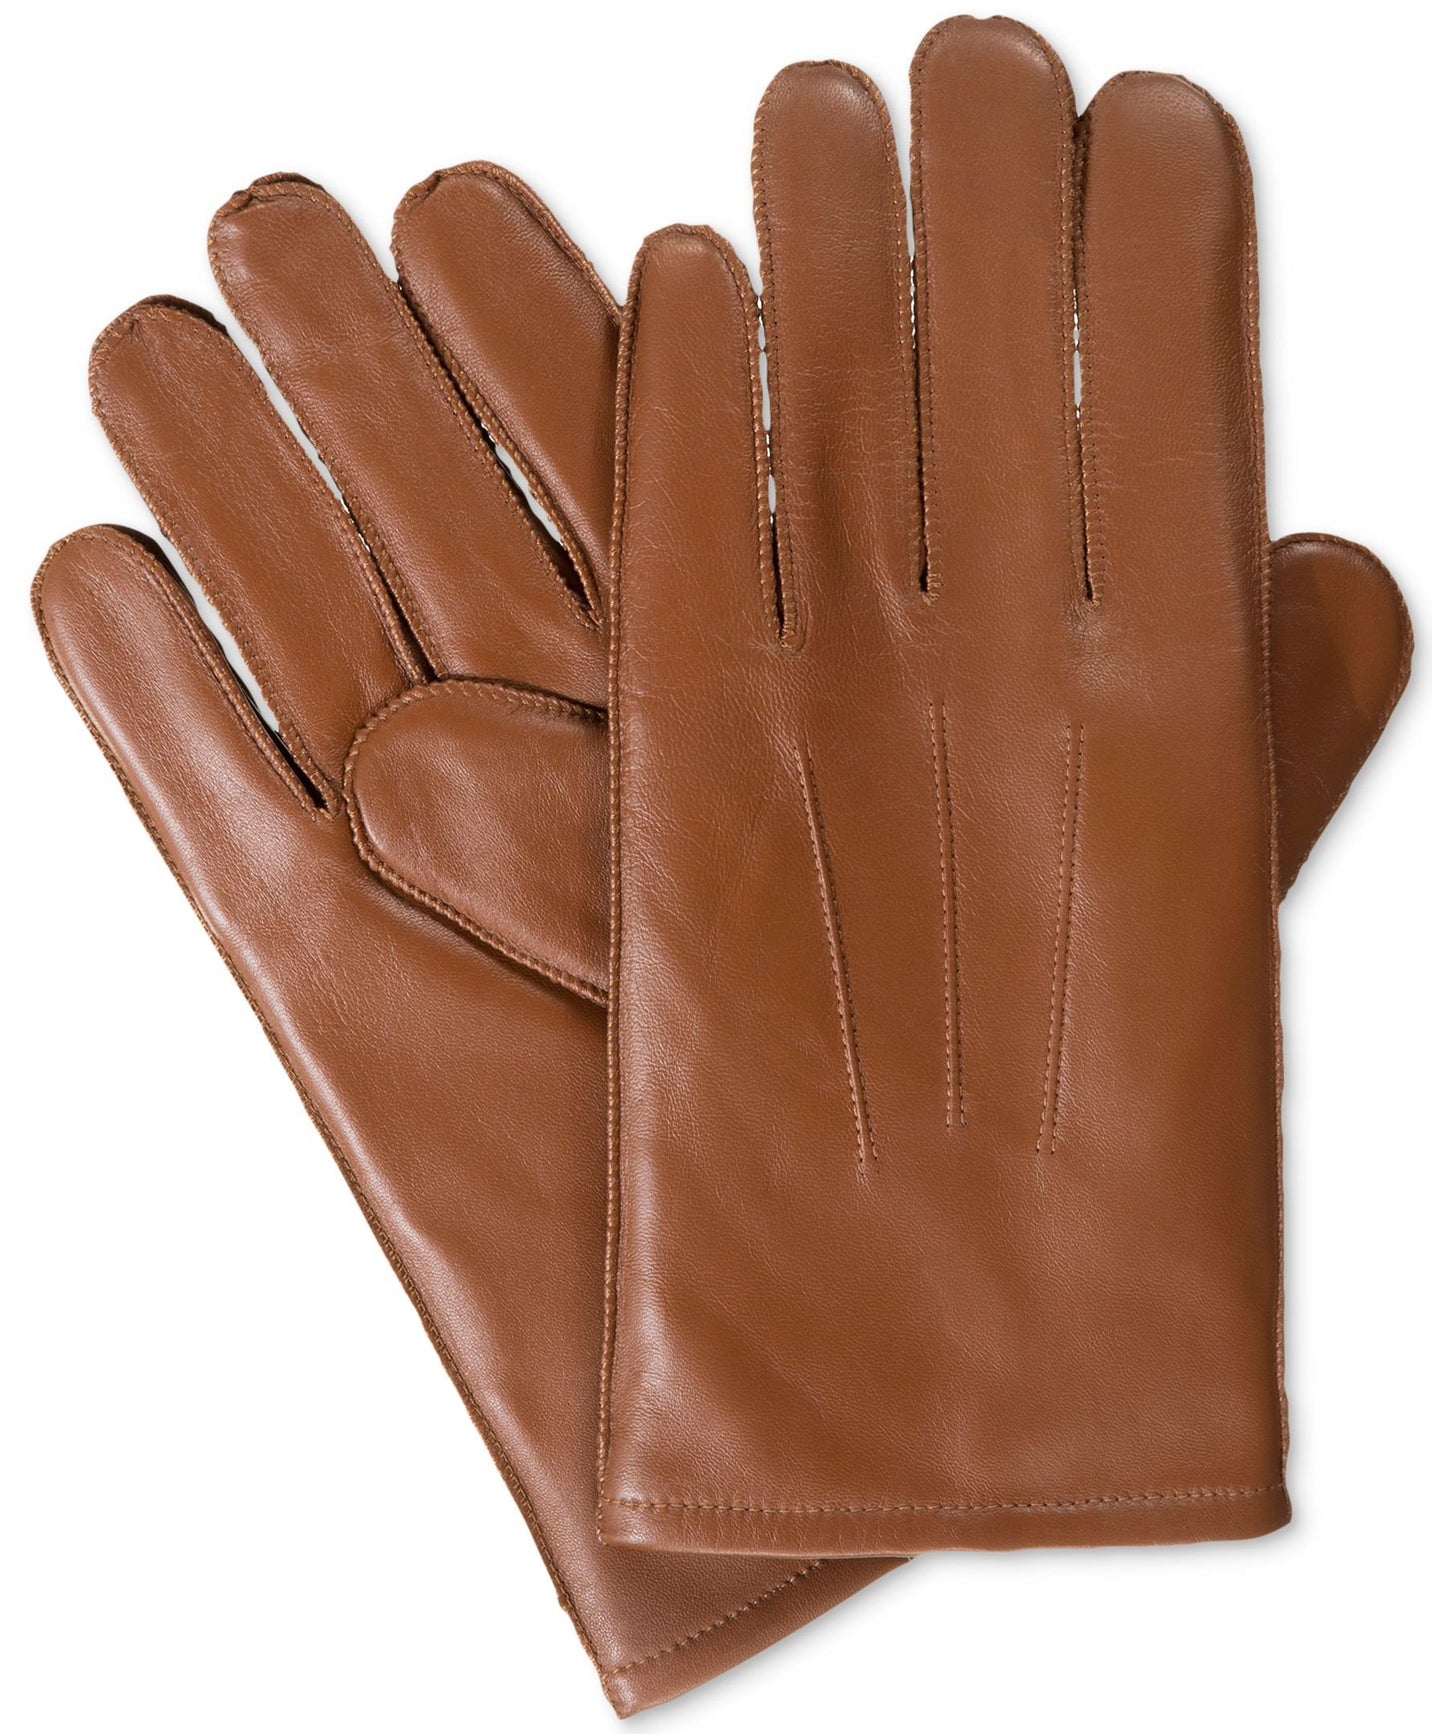 Isotoner Signature Leather Stretch Gloves Large